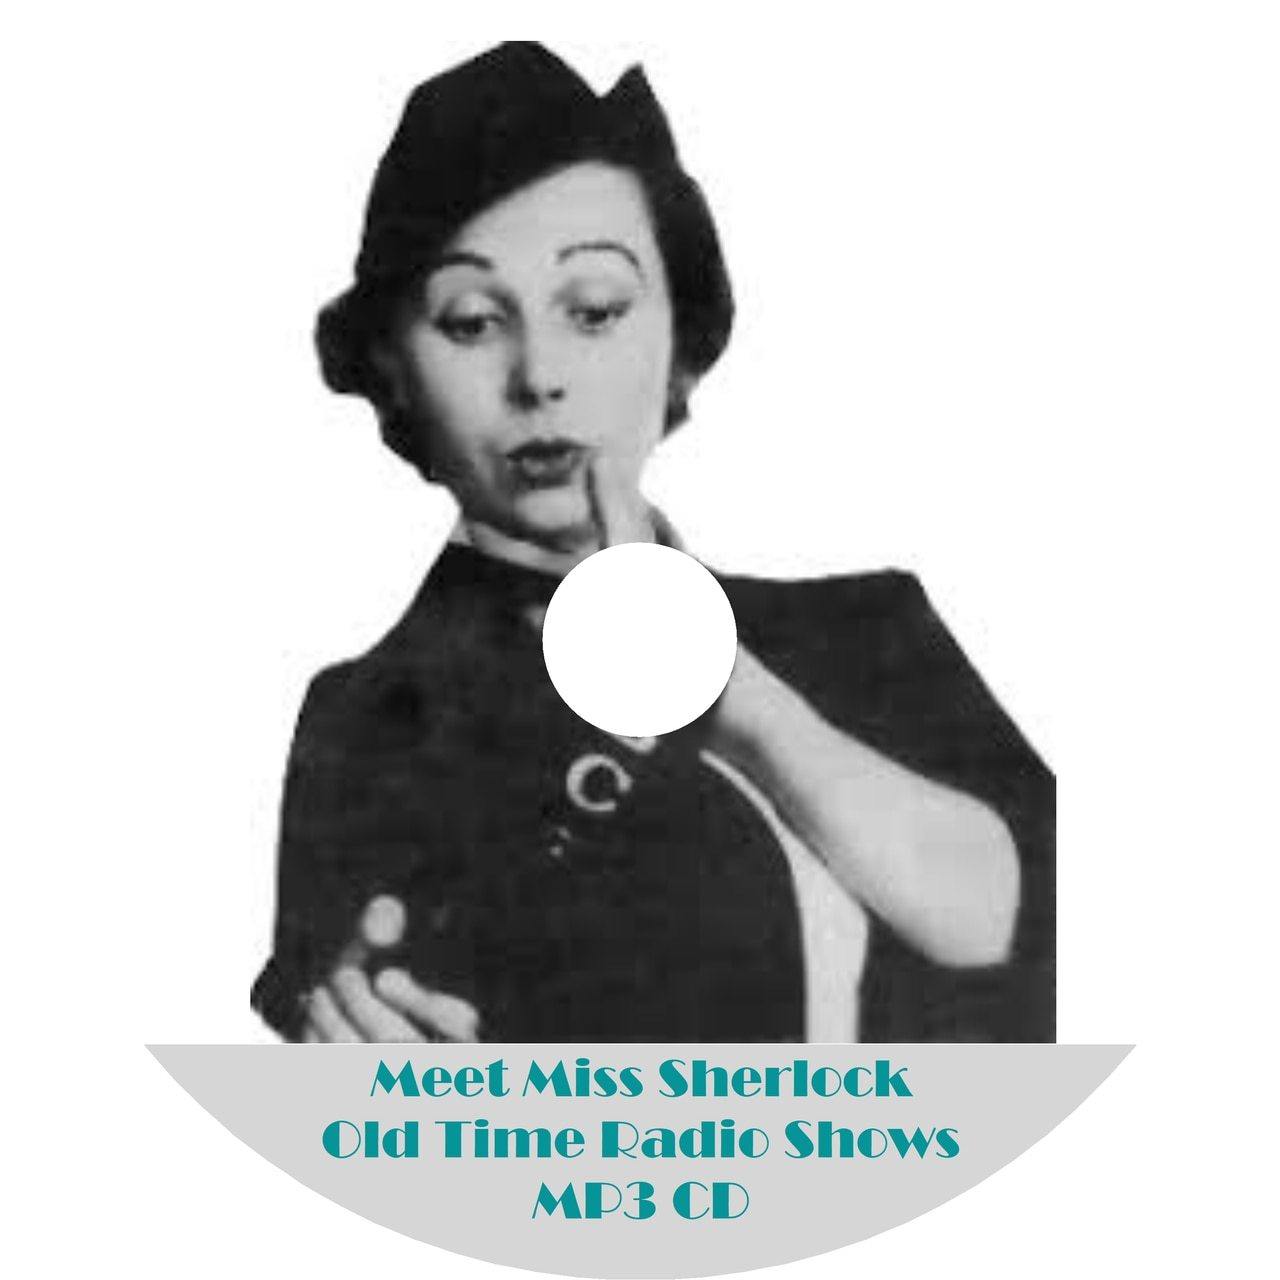 Meet Miss Sherlock Old Time Radio Shows 2 Episodes On MP3 CD - OTR World